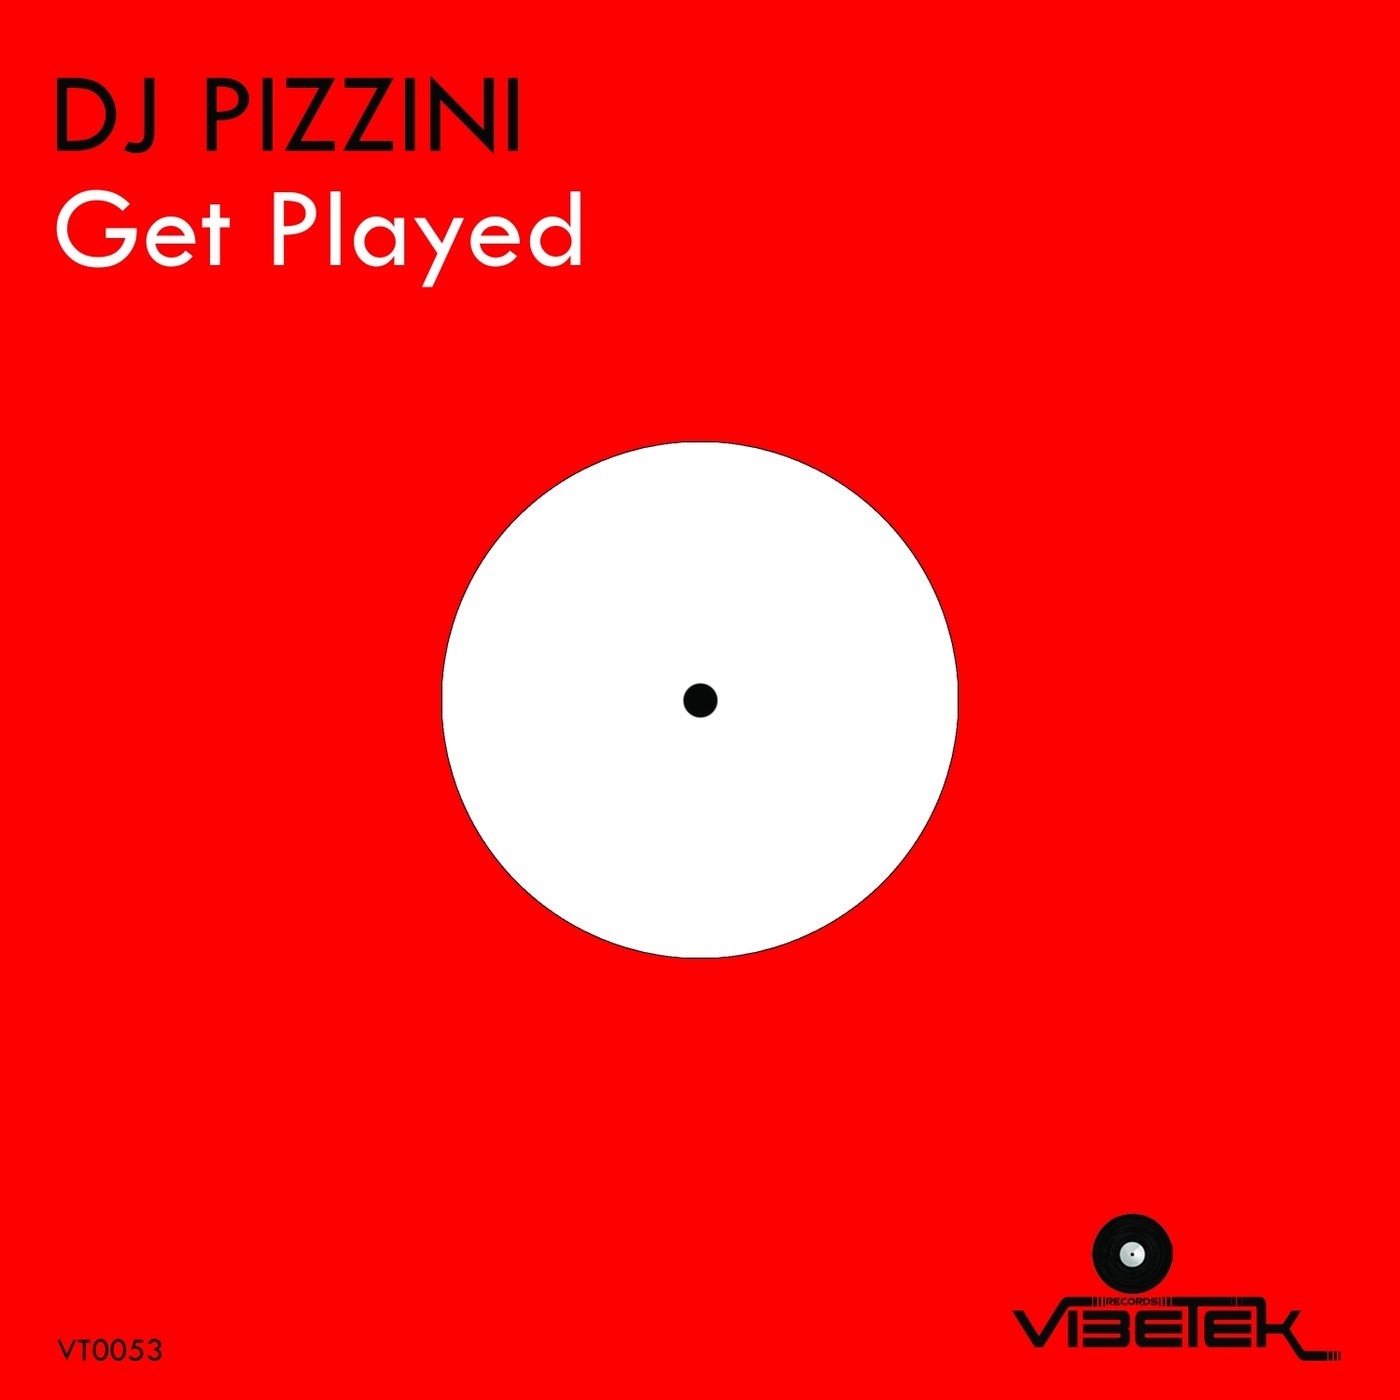 DJ PIZZINI - Get Played [Vibetek Records]